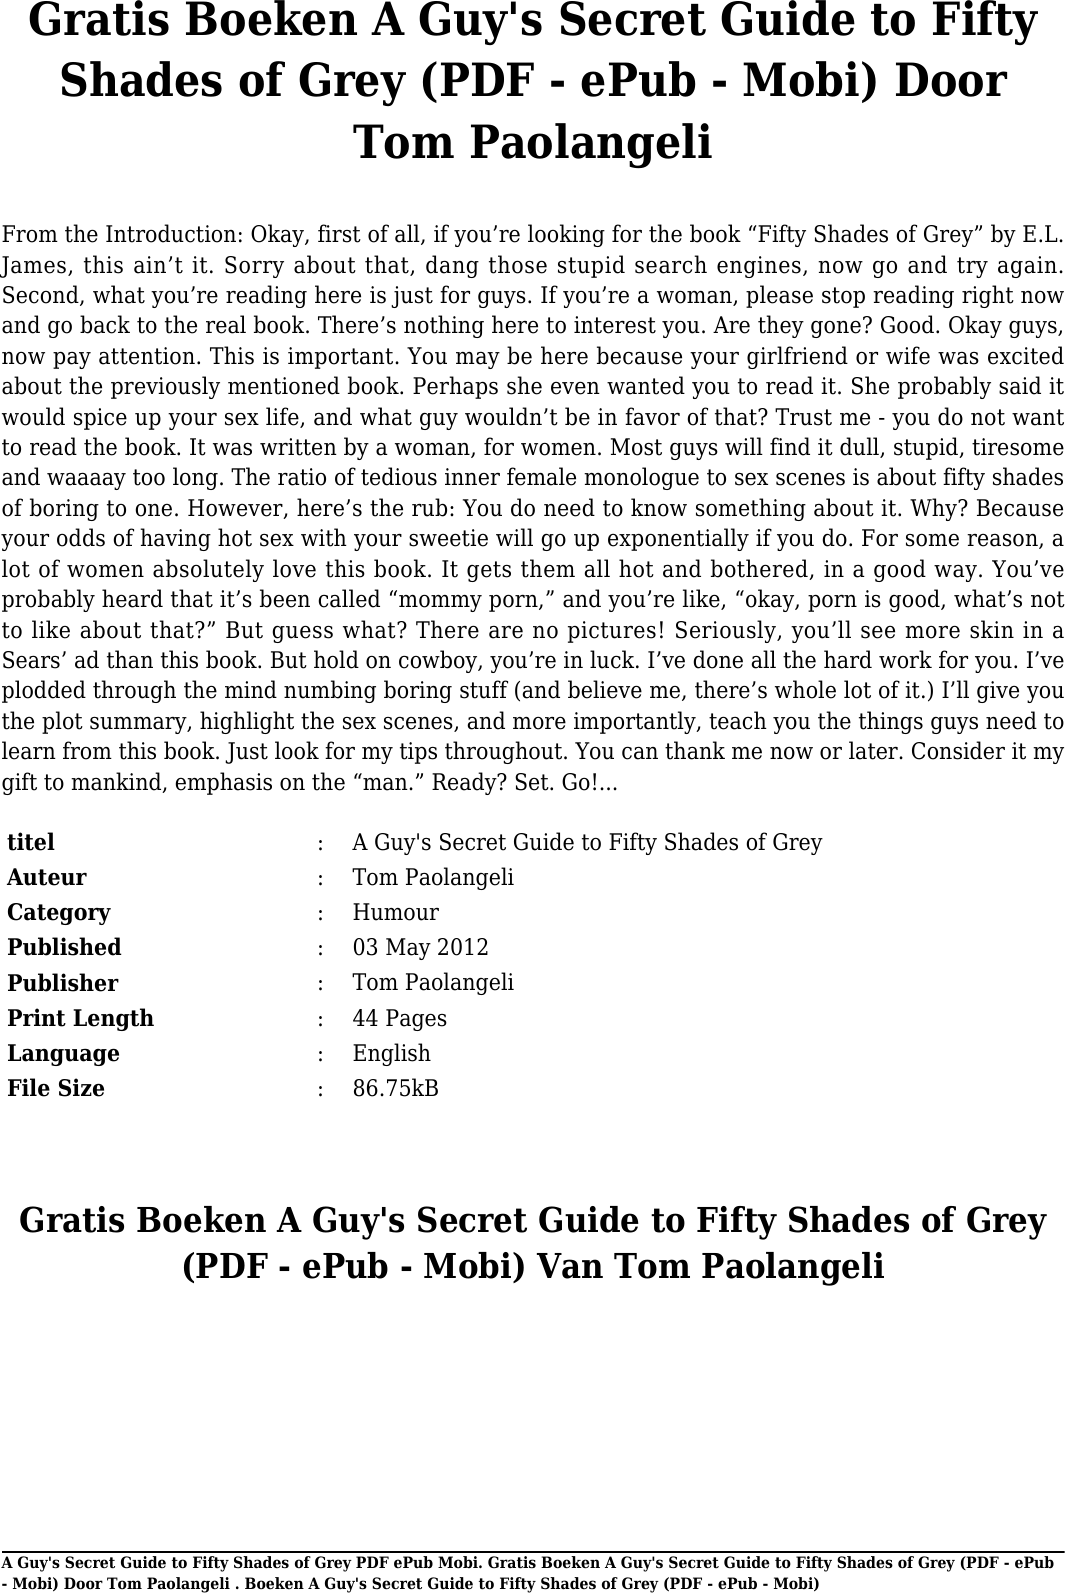 Page 2 of 11 - Gratis Boeken A Guy's Secret Guide To Fifty Shades Of Grey Van Tom Paolangeli(PDF - EPub Mobi) (PDF E Pub Paola